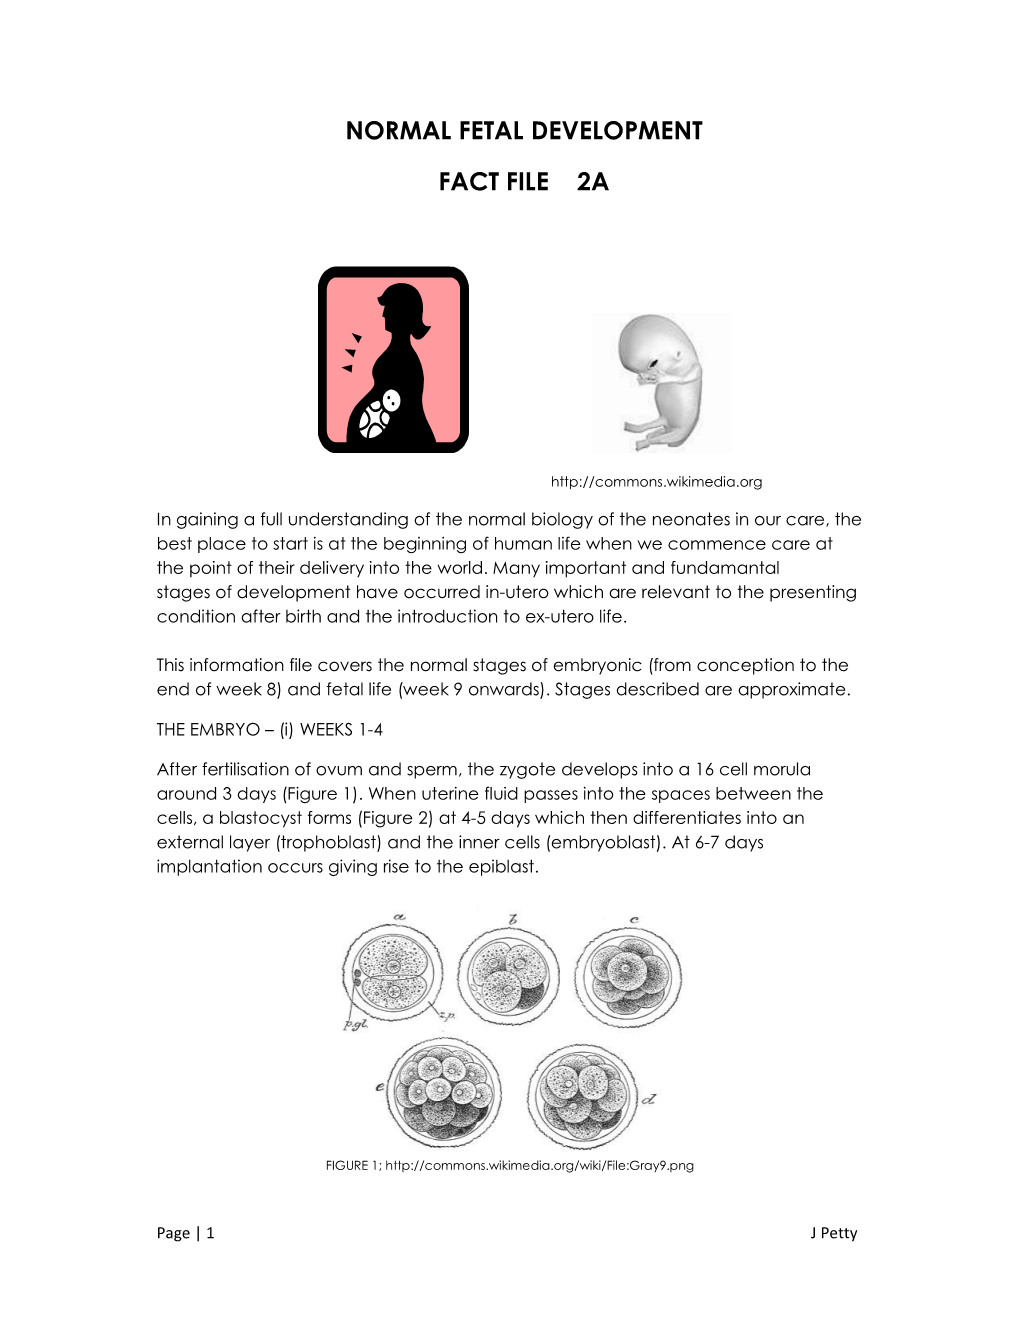 Normal Fetal Development Fact File 2A